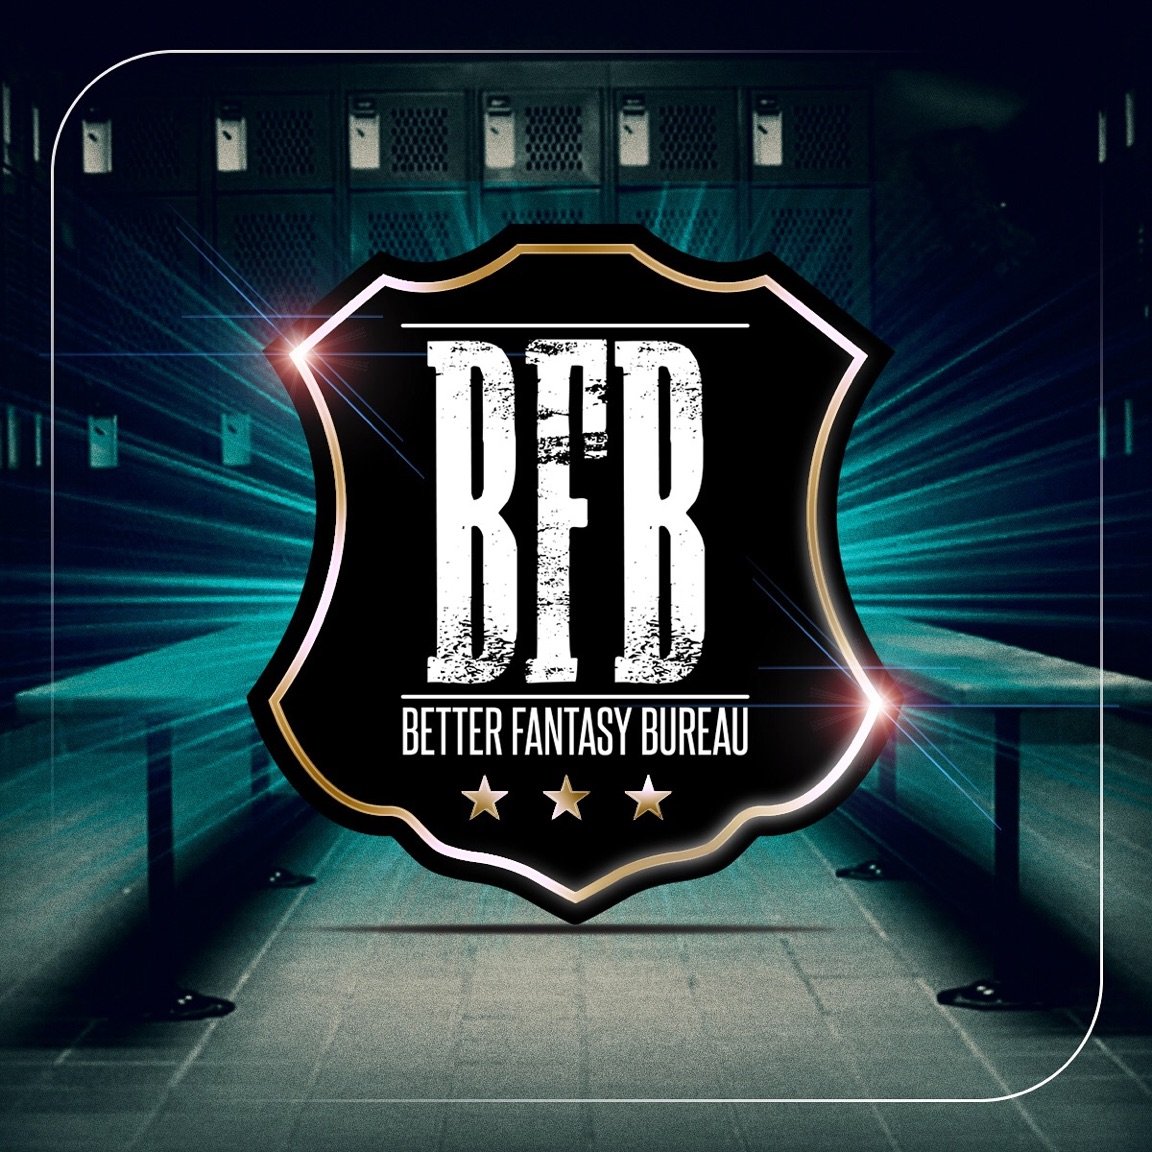 For the Everyday Fantasy Sports Player! #bfb #bfa @flxhitlist @marquetti #fantasysports #fantasyfootball #podcast